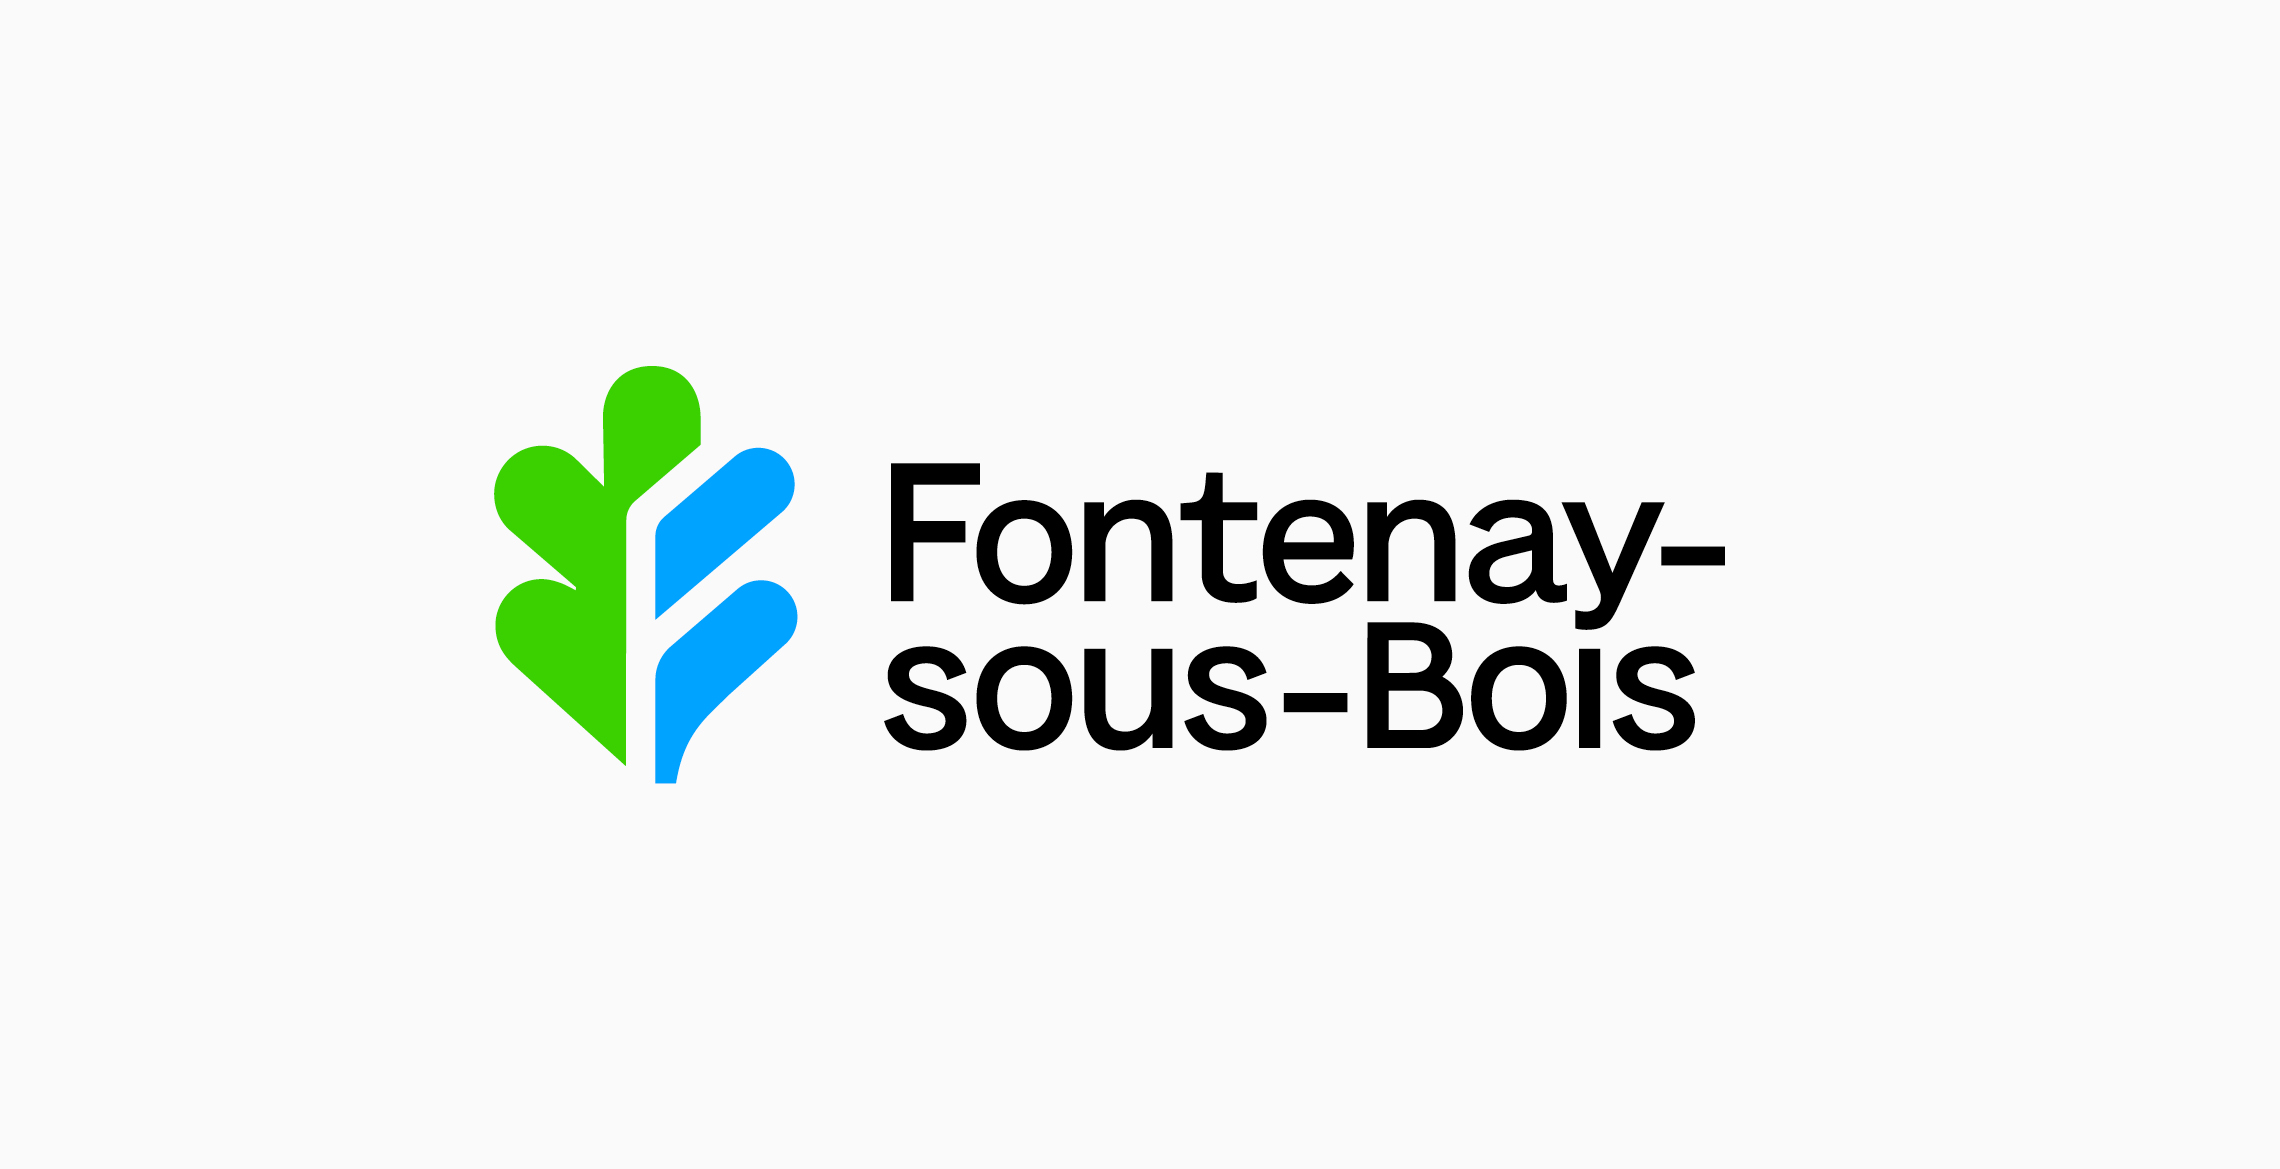 Fontenay_sous_Bois_visual_identity_header_logo.jpg